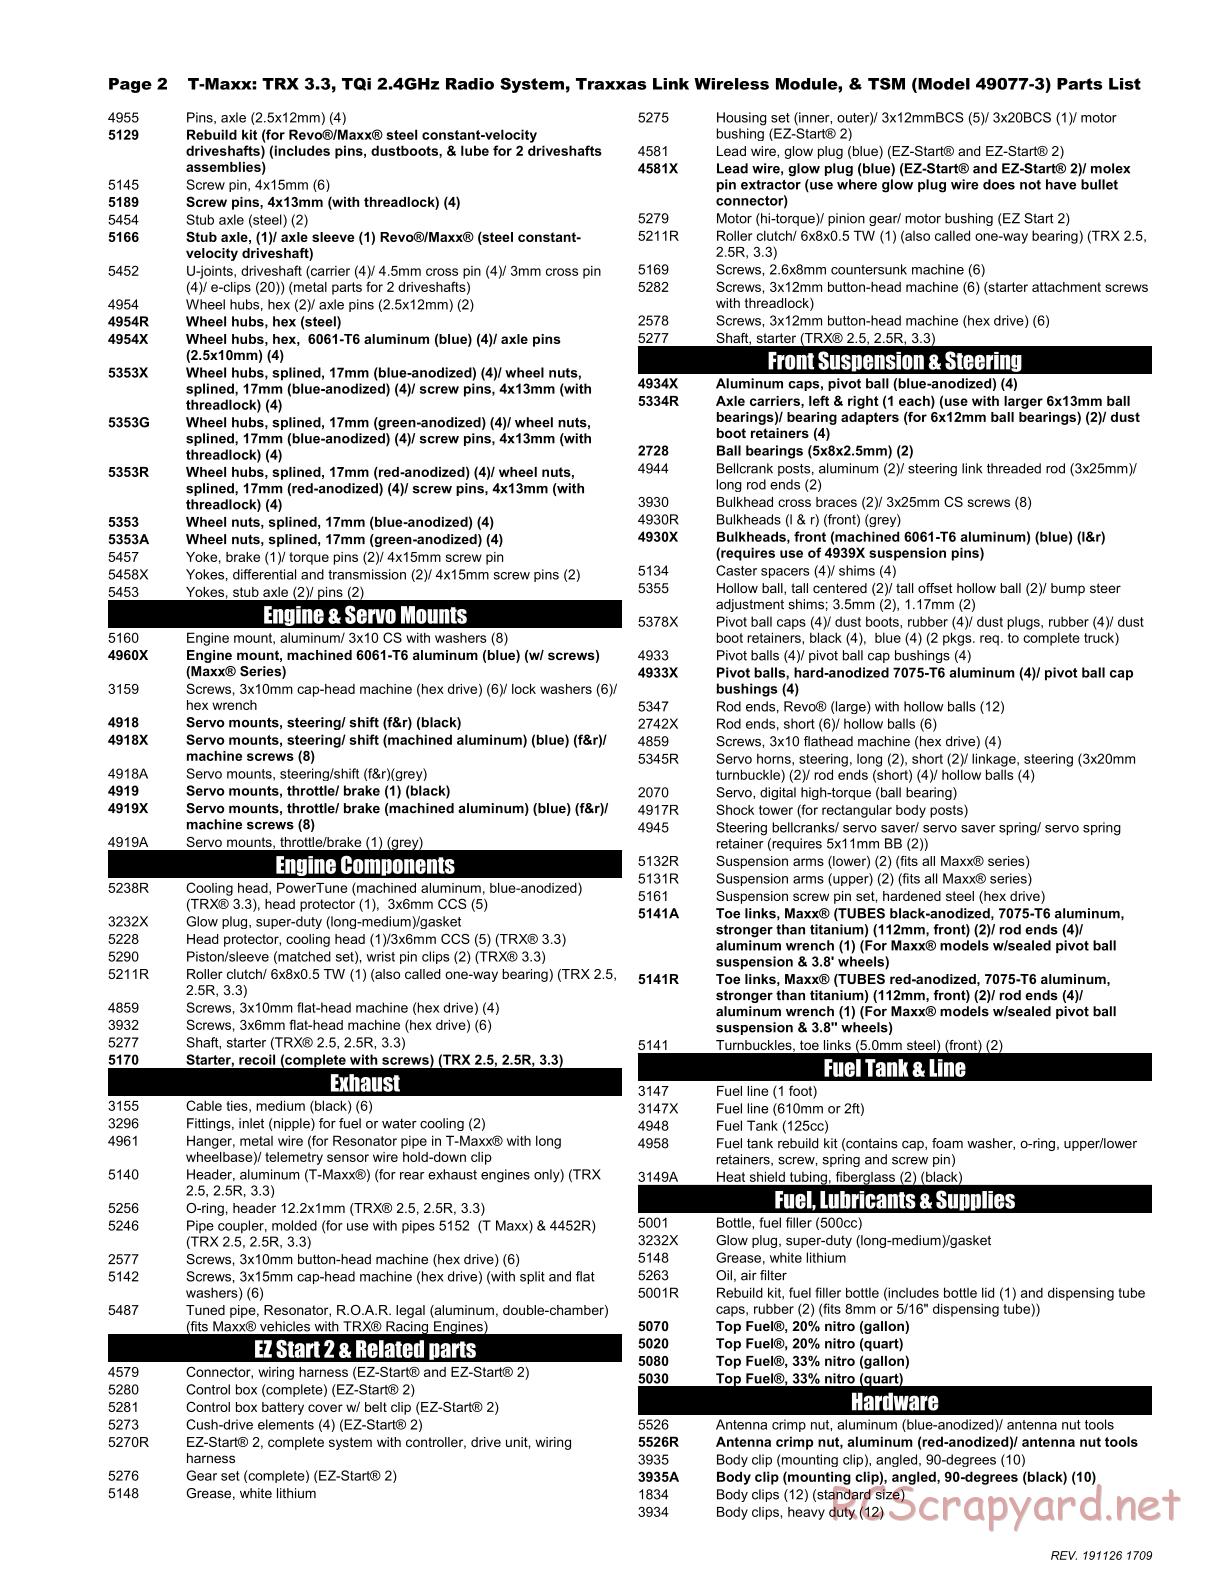 Traxxas - T-Maxx 3.3 TSM - Parts List - Page 2